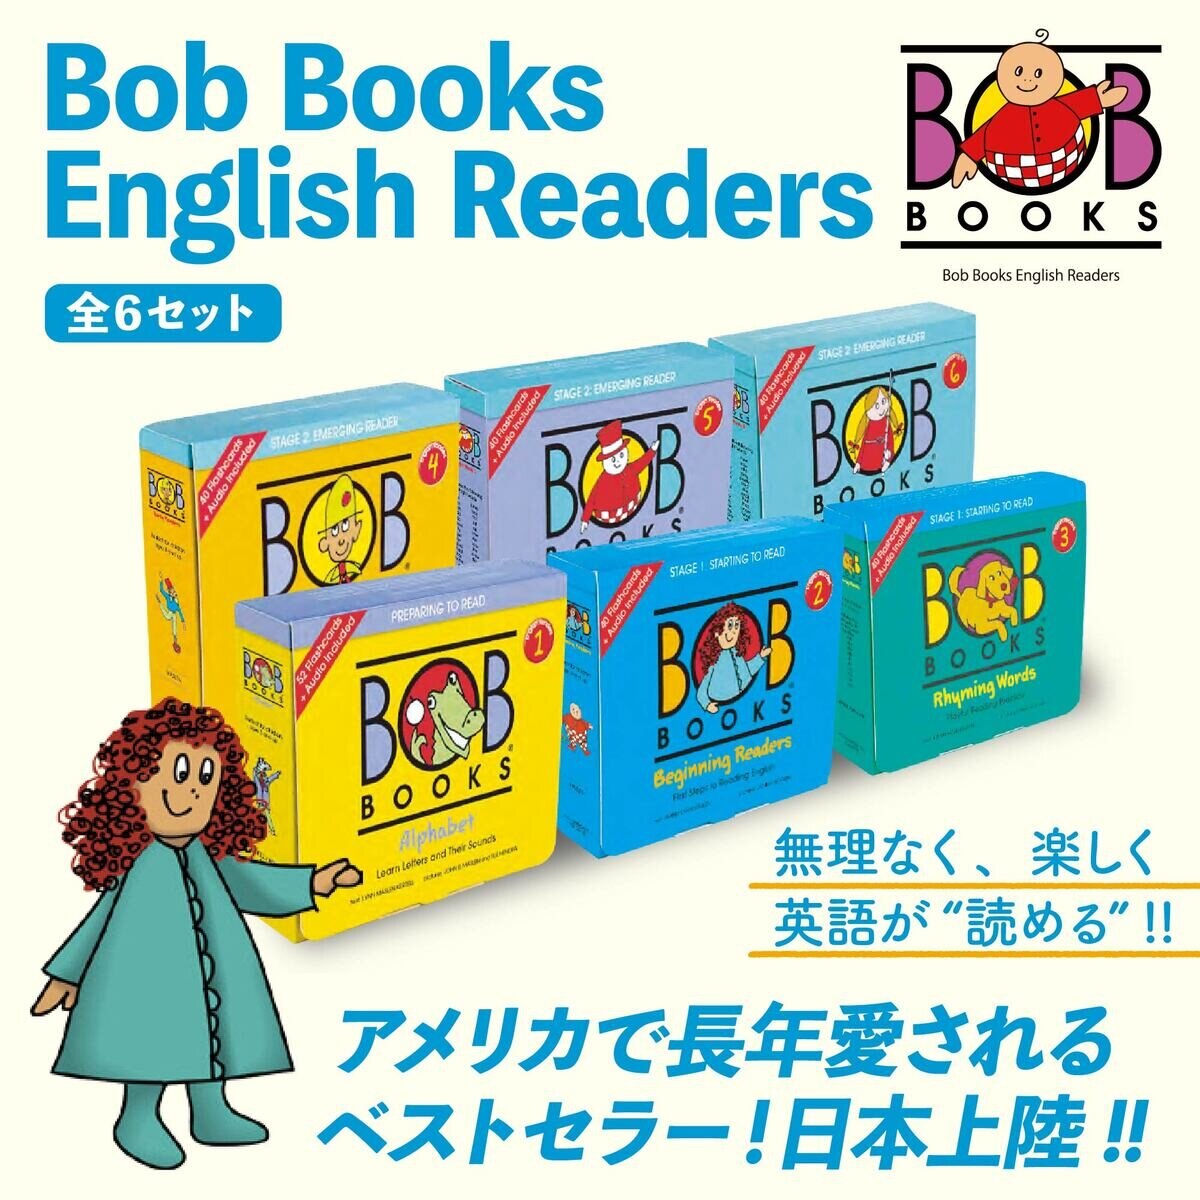 BOB BOOKS ENGLISH READERS